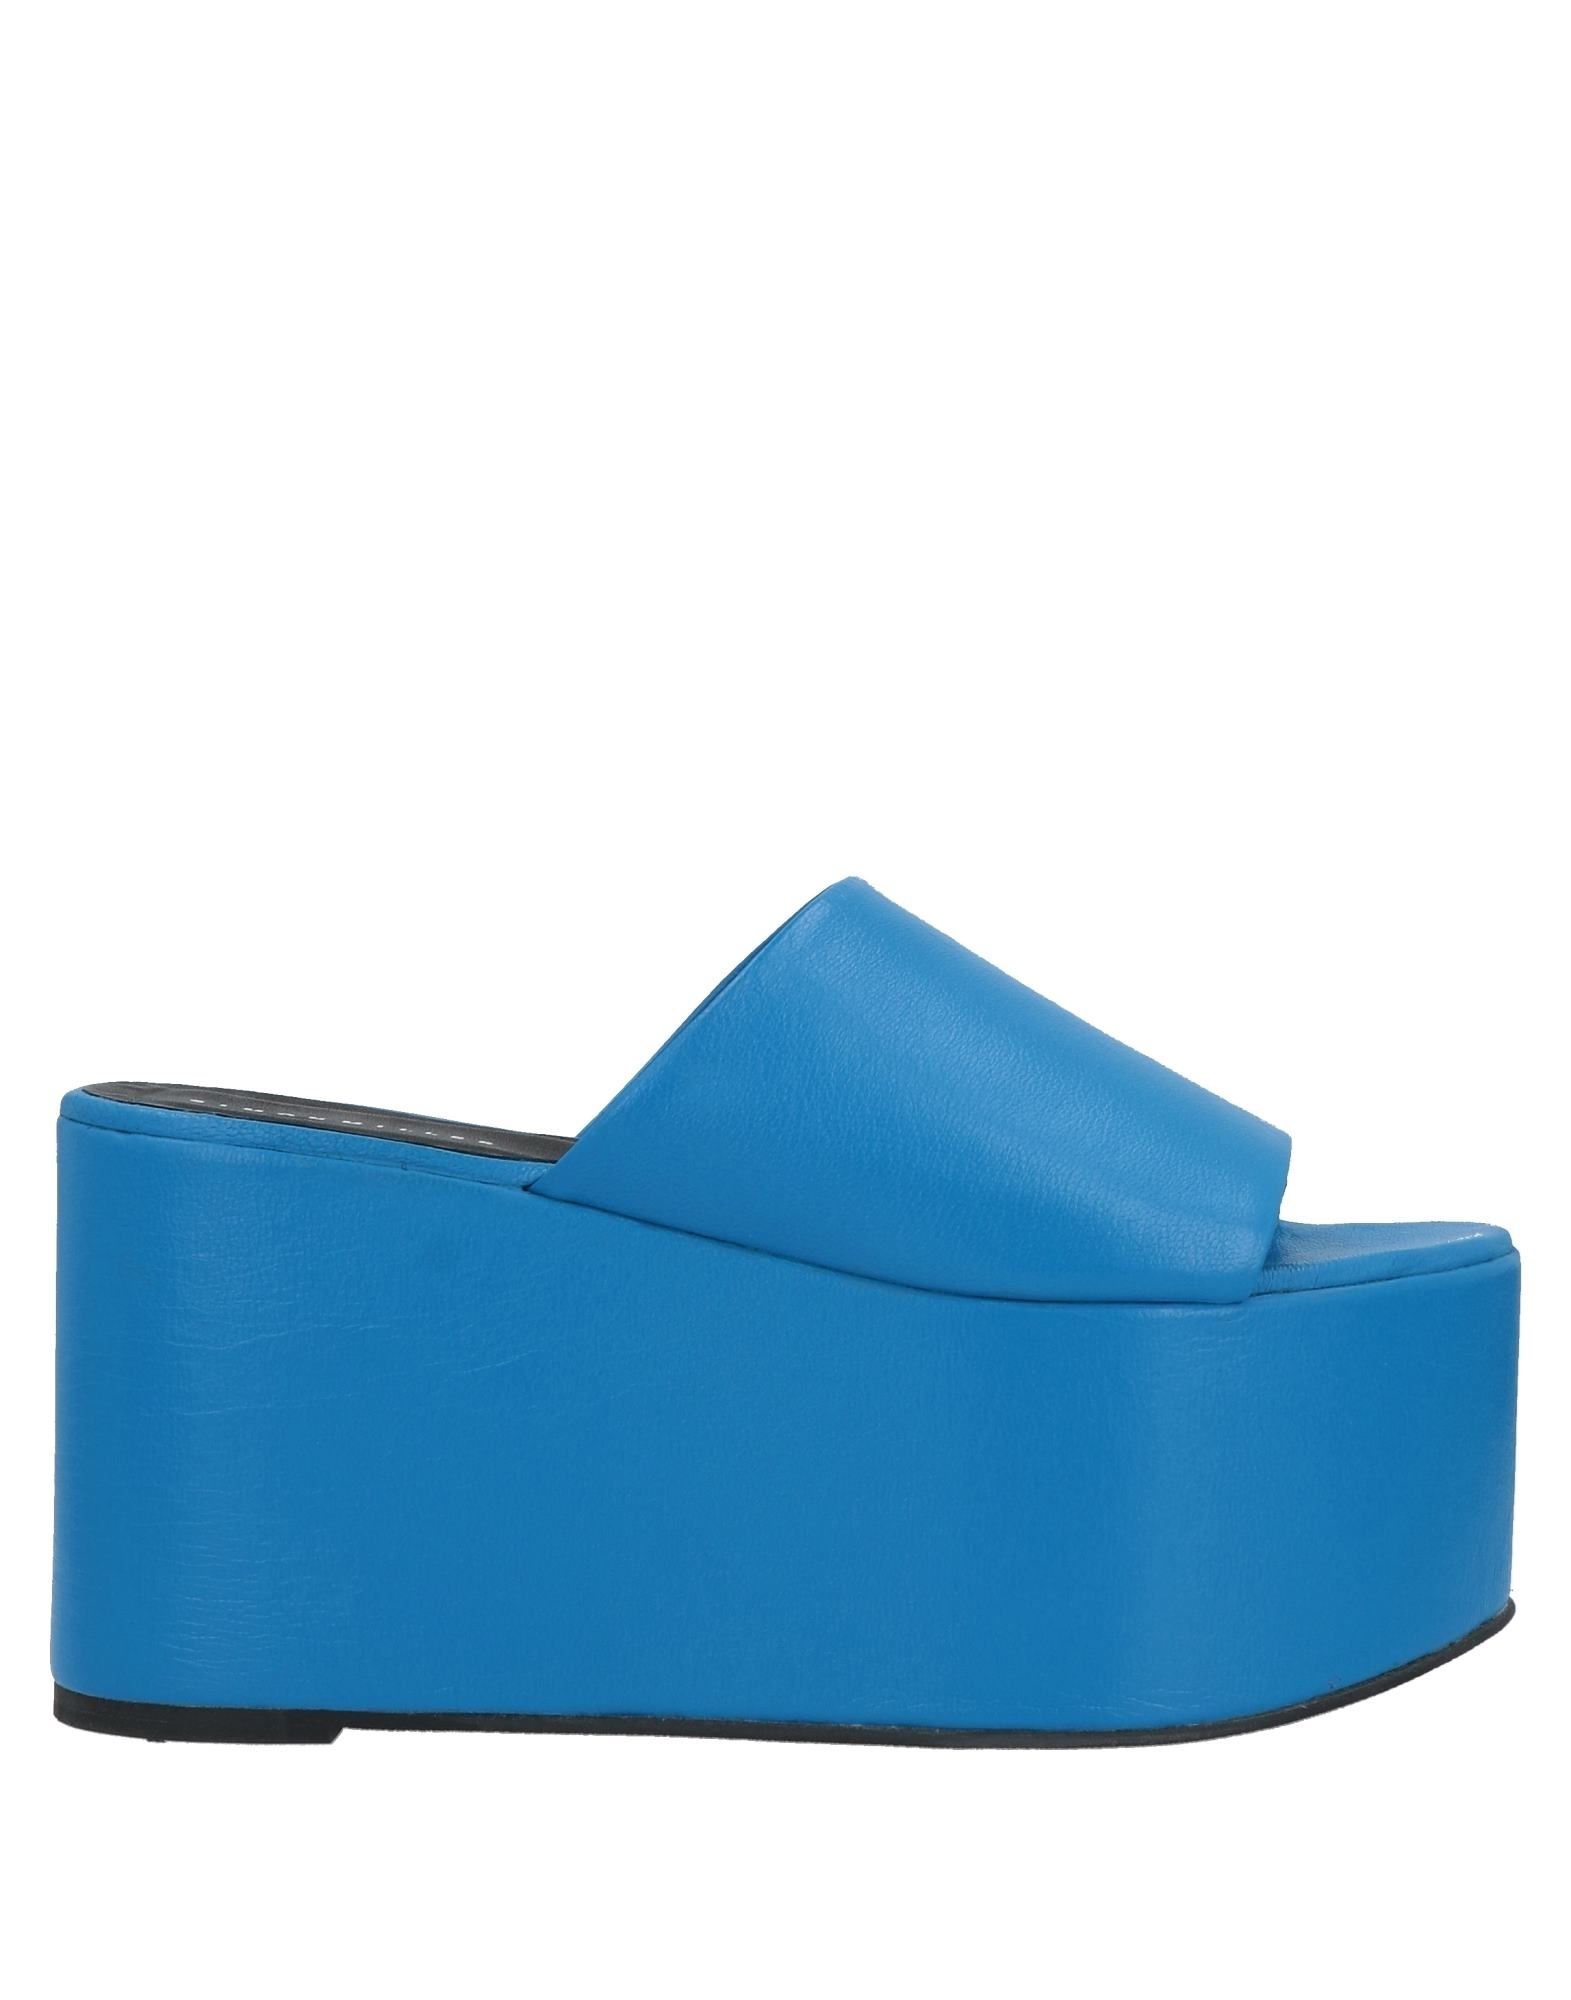 Simon Miller Sandals In Bright Blue